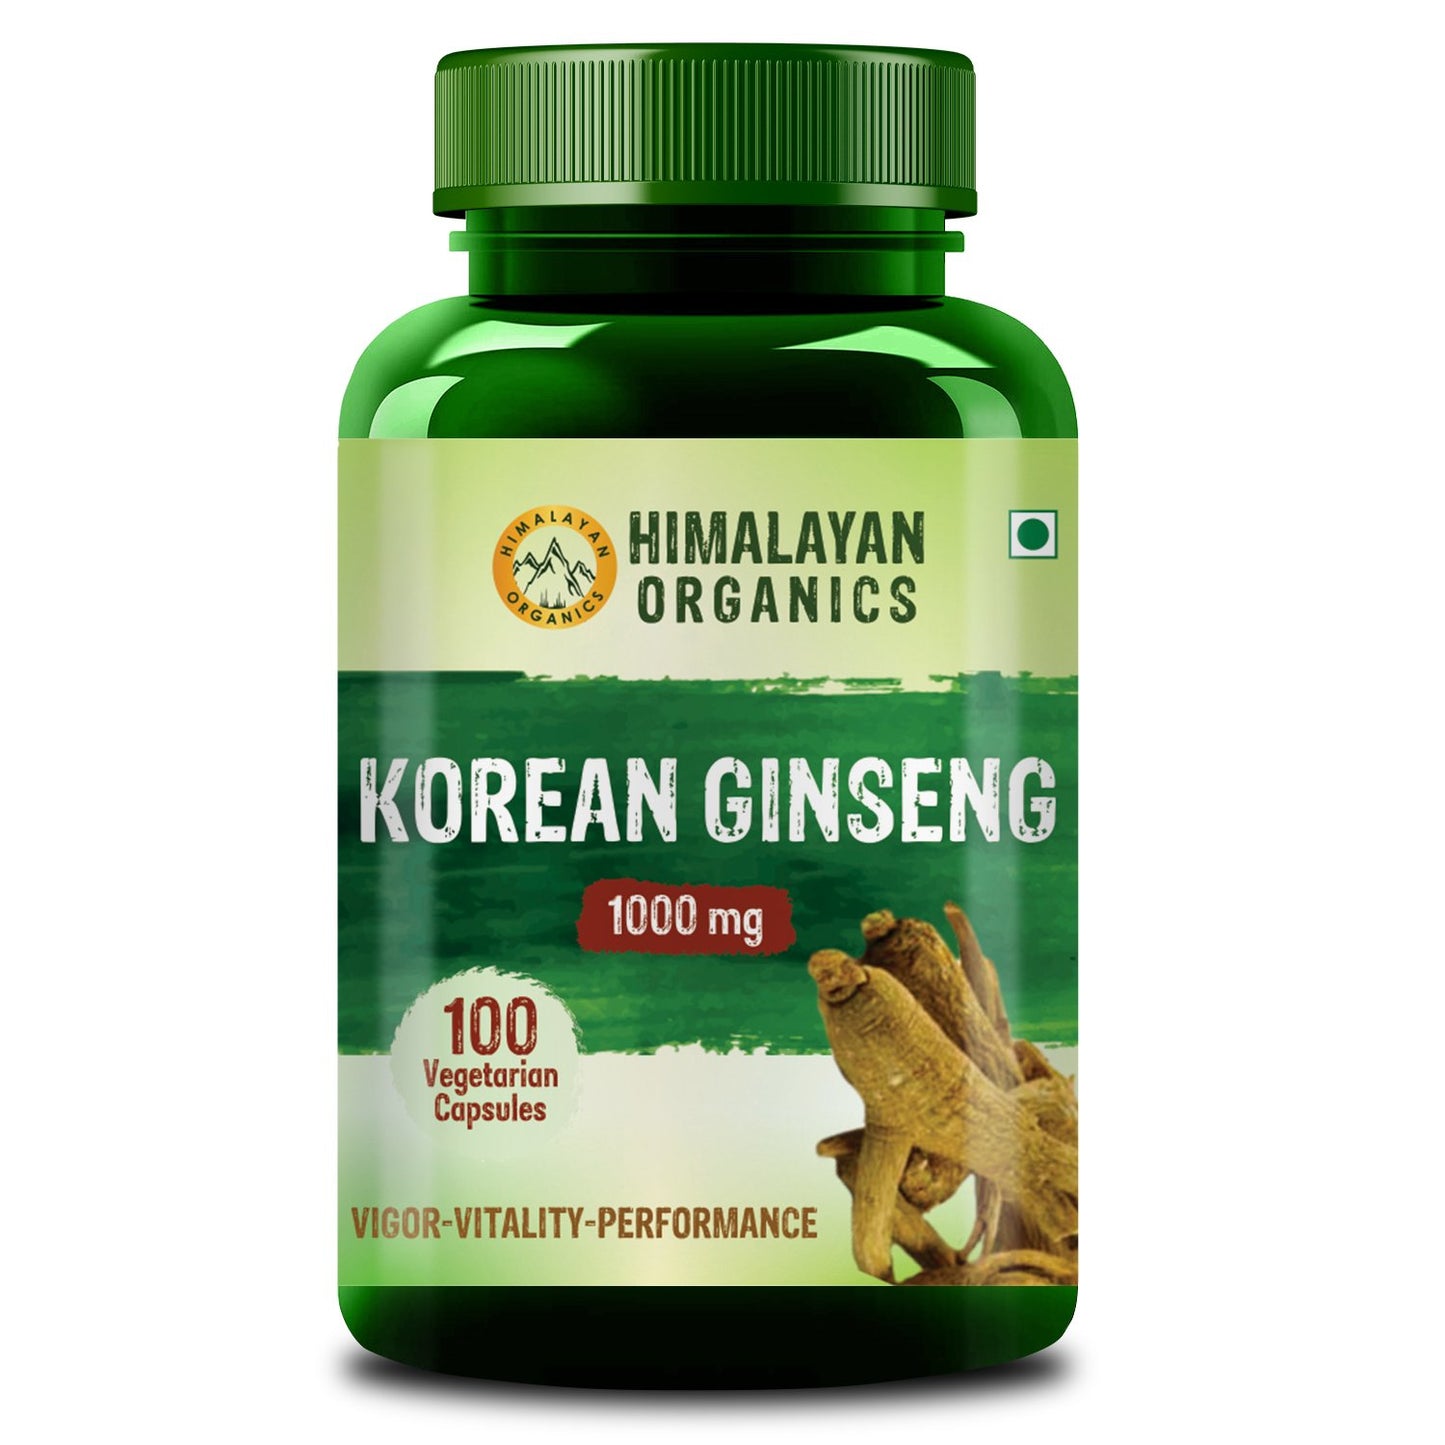 Himalayan Organics Korean Ginseng with Vigor - Vitality Performance